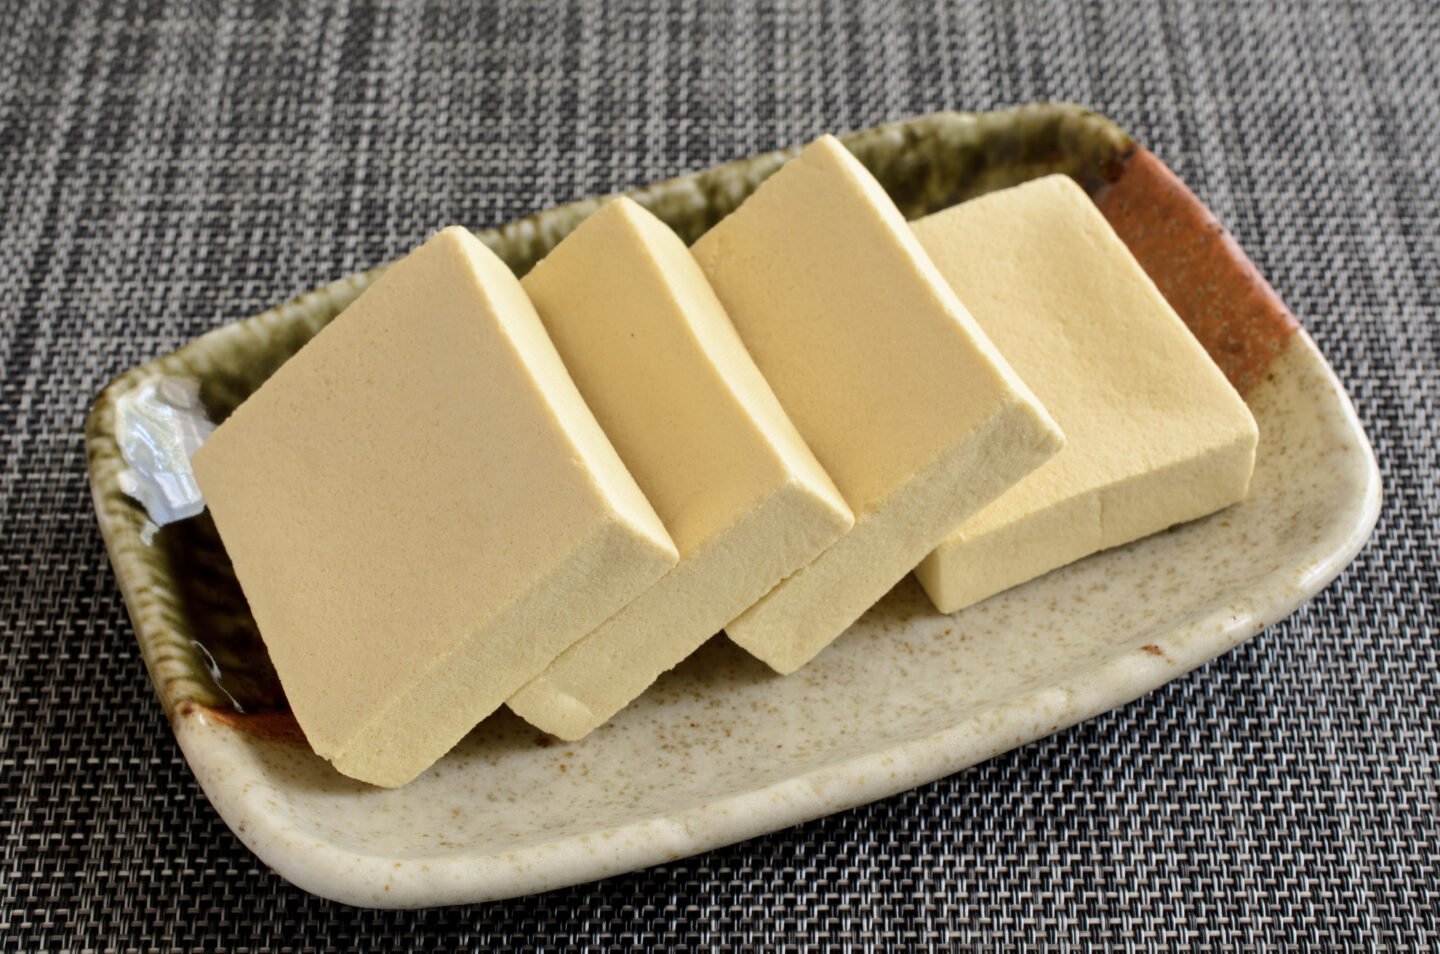 "koya dofu",,Image,Of,Freeze dried,Tofu